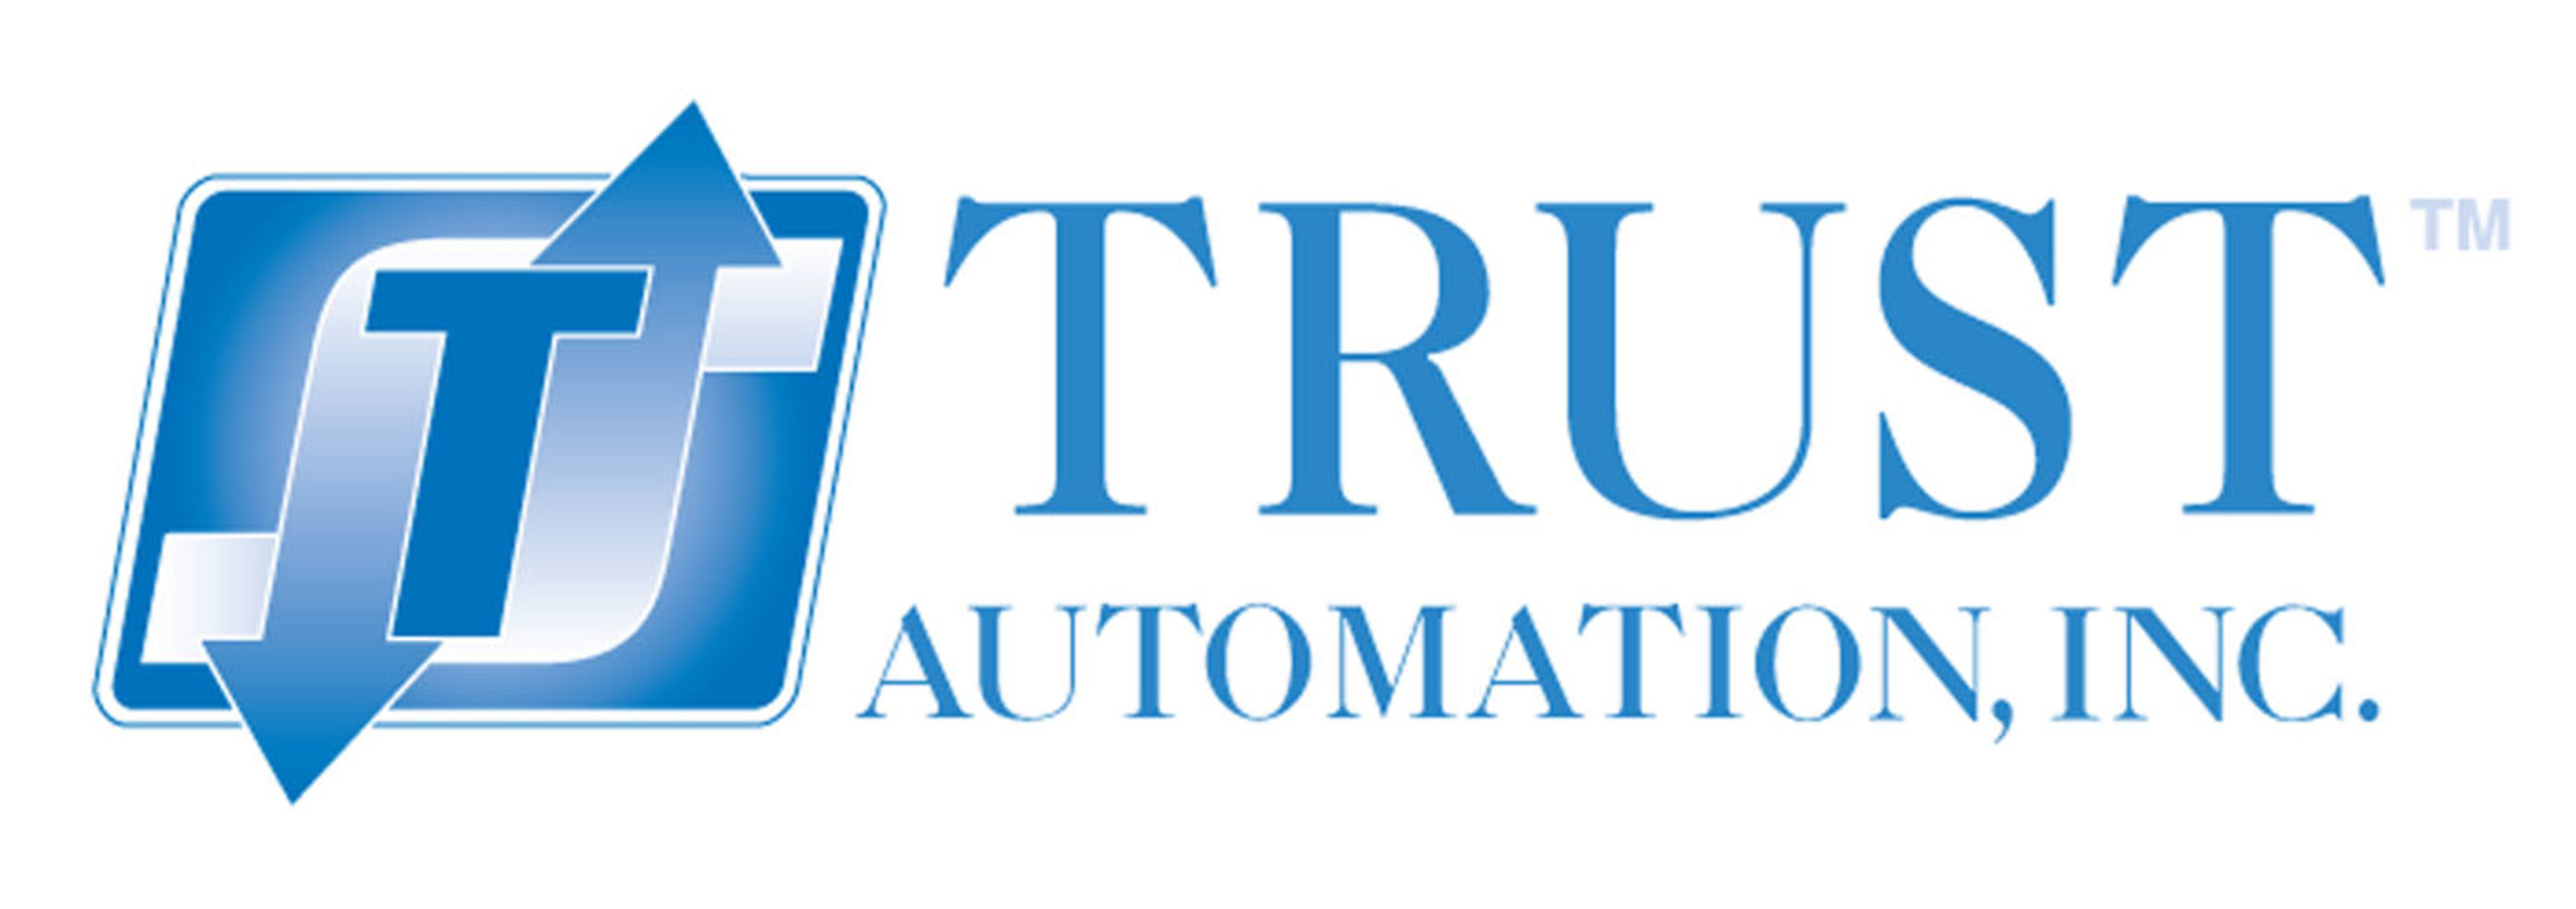 Trust Automation, Inc. Logo. (PRNewsFoto/Trust Automation, Inc.)